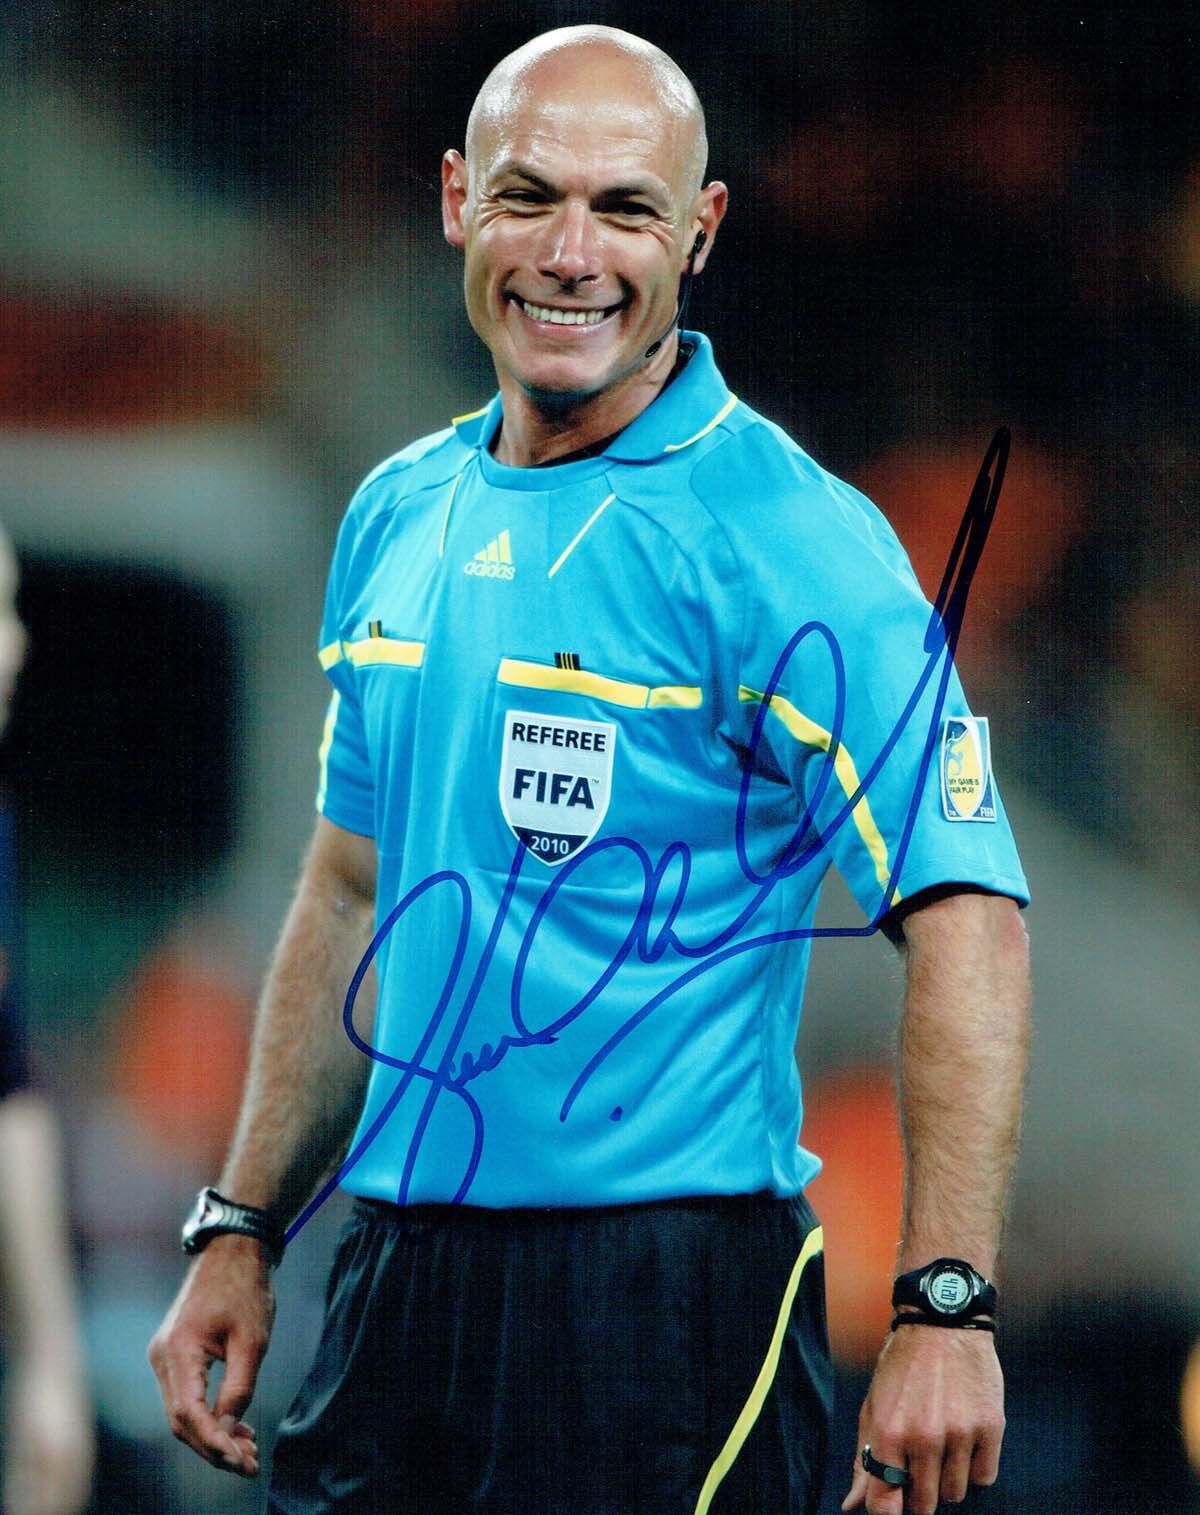 Howard WEBB Signed 10x8 Photo Poster painting 2 AFTAL COA Autograph Football Referee